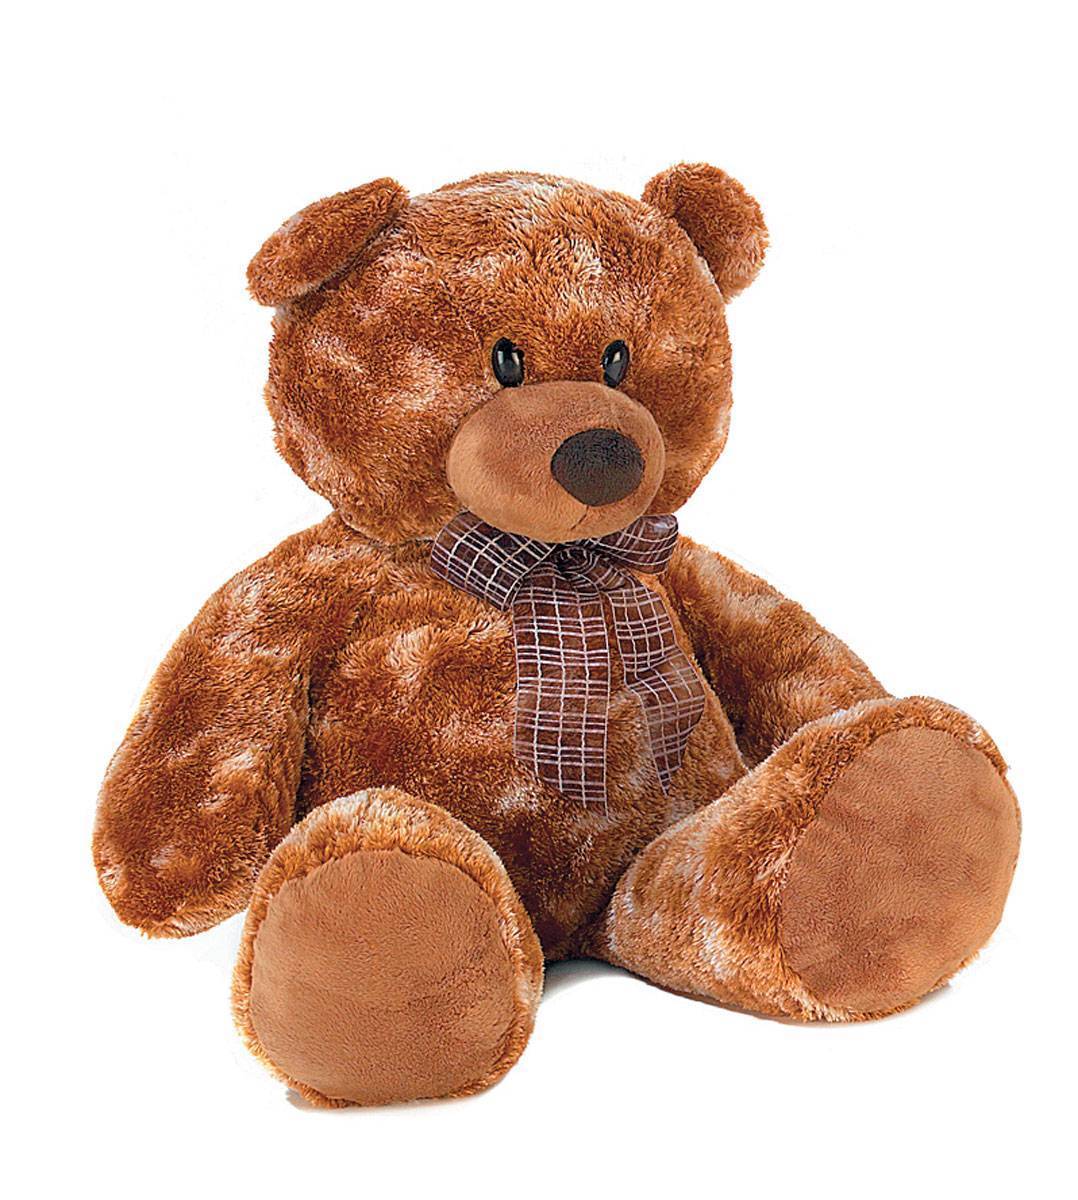 Toys медведь. Aurora игрушки медведь коричневый. Aurora медведь коричневый сидячий. Мягкая игрушка медведь коричневый Aurora.